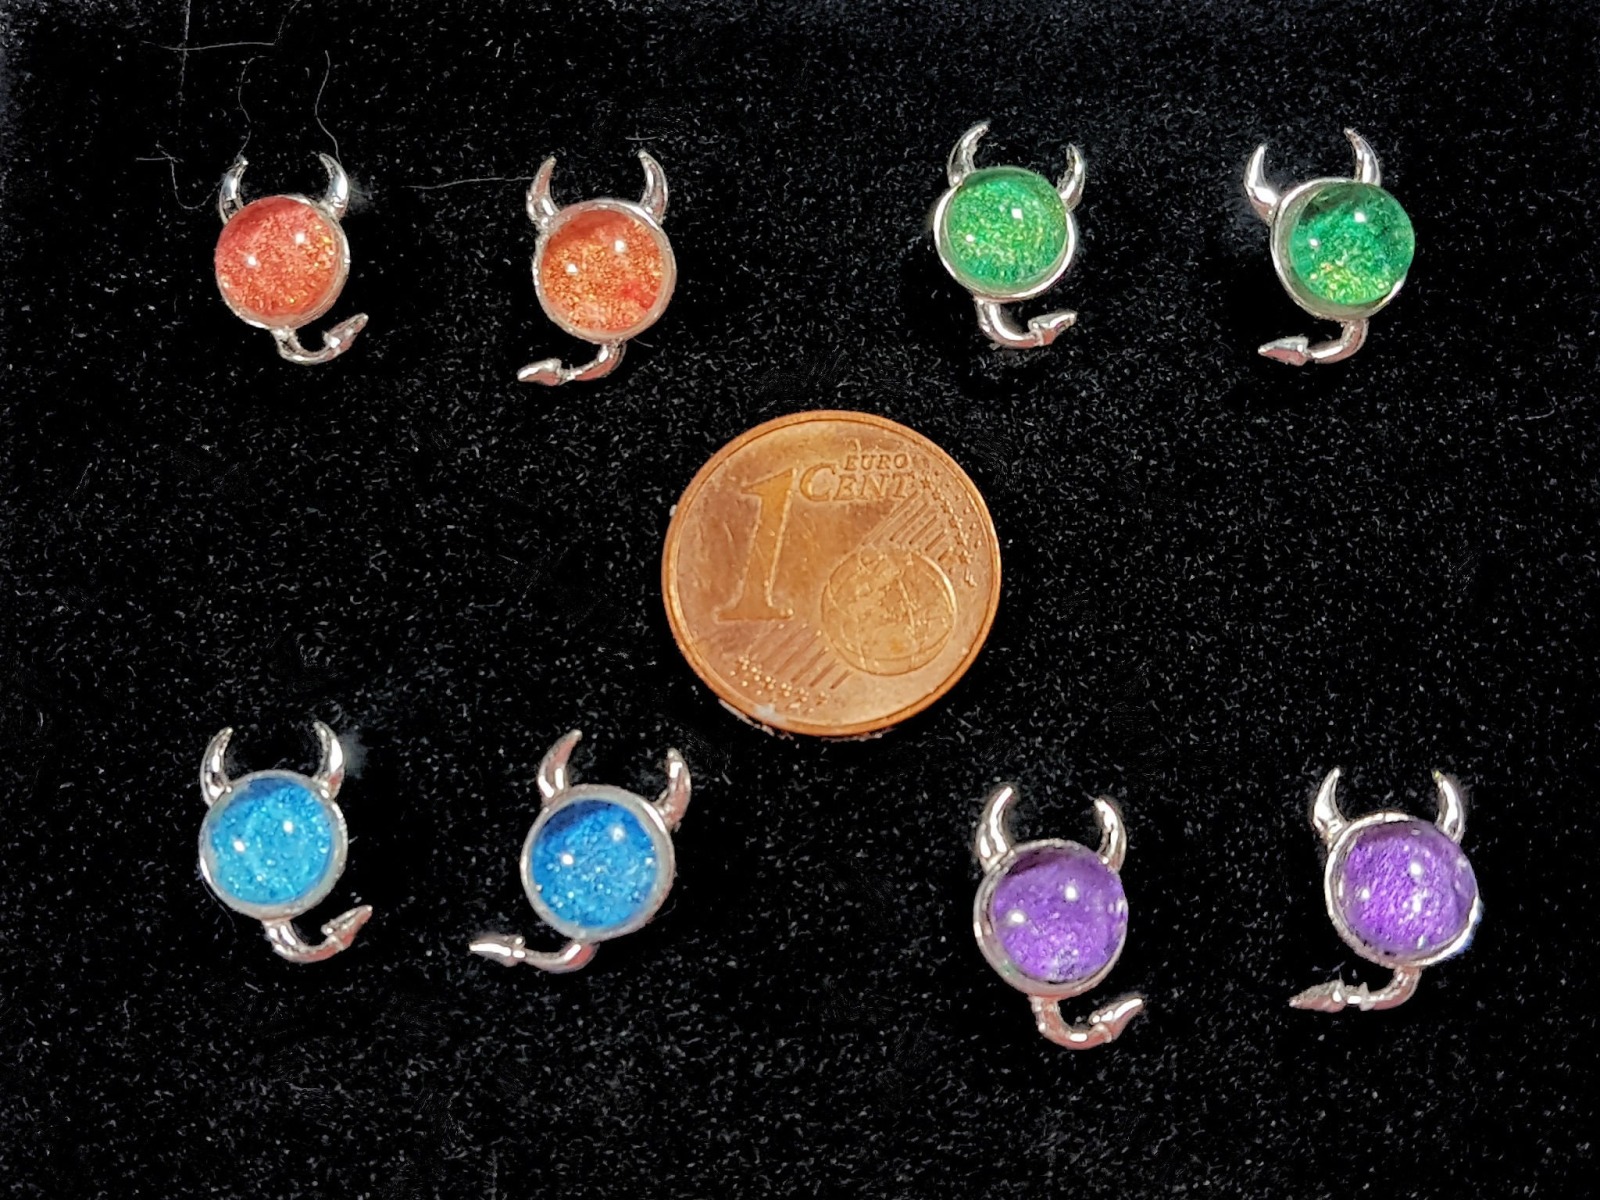 Teufels Galaxien handgemalt mehrere Farben Echtsilber-Ohrringe Original Aquarell in Sterling Silber